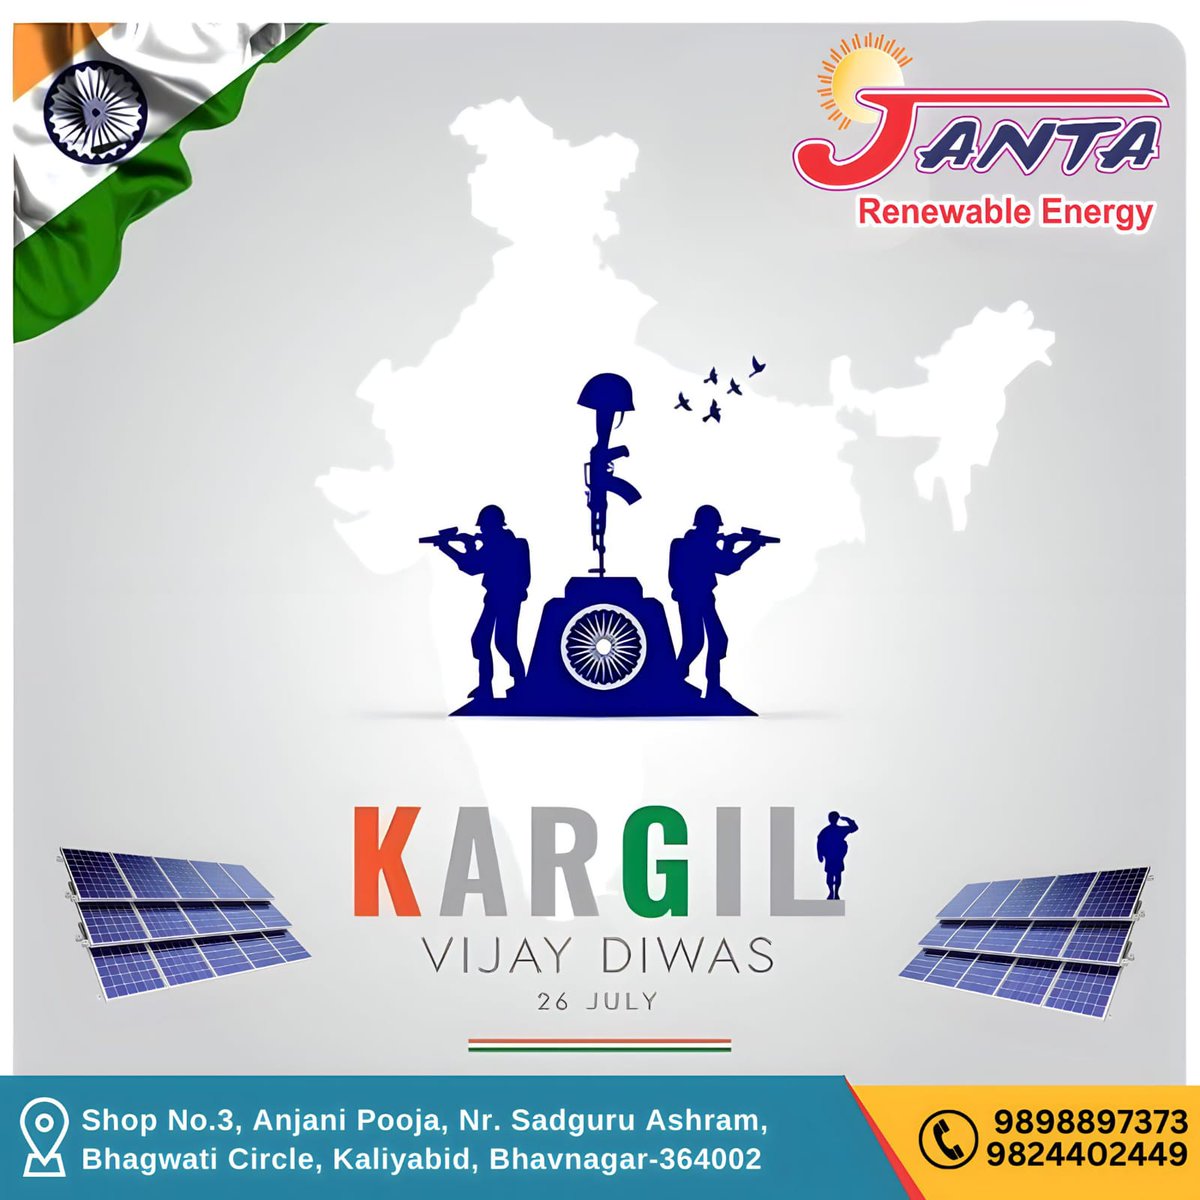 ' KARGIL VIJAY DIWAS !! ' 🌳🌲🌞 ભવિષ્યનો એક માત્ર વિકલ્પ સૌરઊર્જા !! 'JANTA RENEWABLE ENERGY' Mo📞: 9838897373 #KargilVijayDiwas #solarrooftop #JANTA #renewable #energy #solarpower #solarpanels #ecofriendly #saveelectricity #solarenergy #powerplant #plant #Bhavnagar #Gujarat